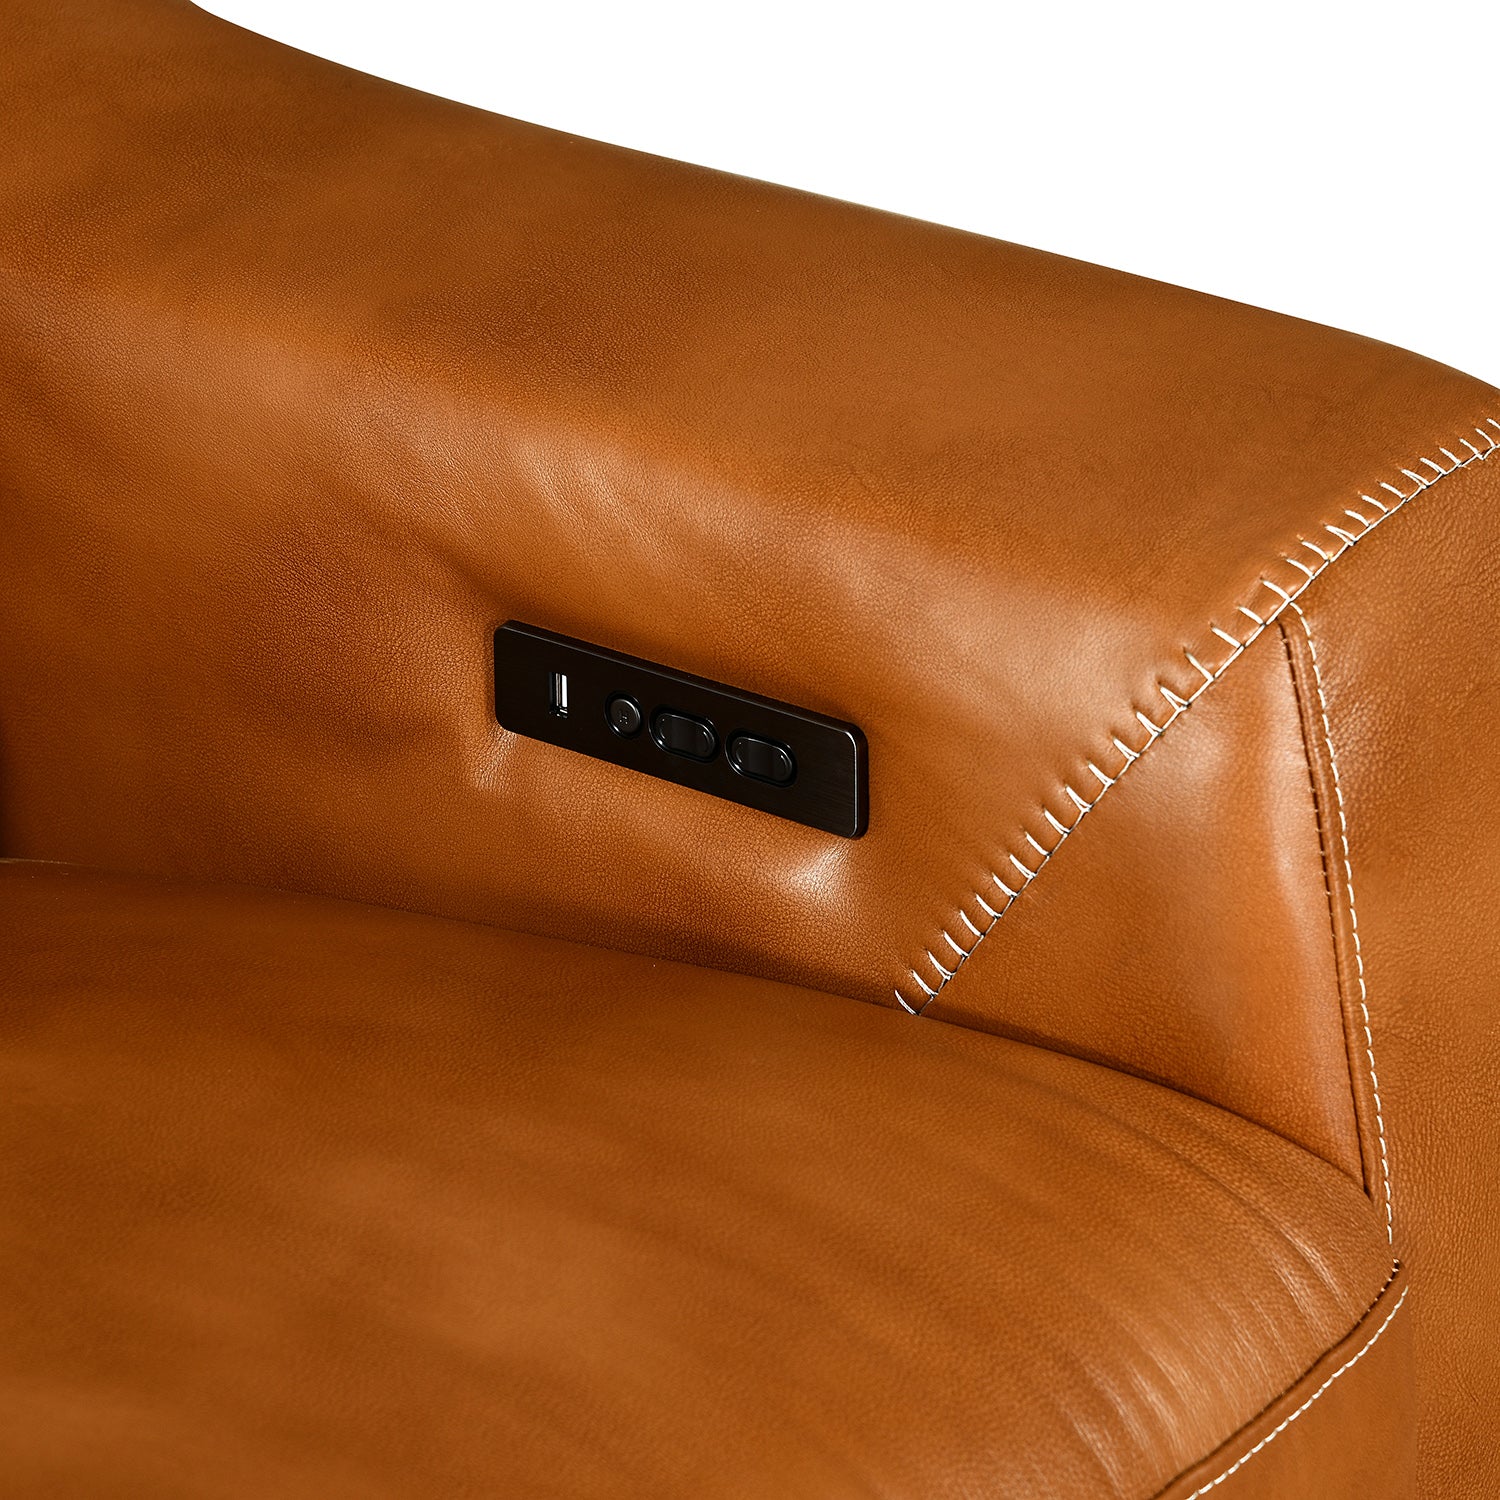 Olympus 1 Seater Adjustable Headrest Power Recliner Sofa (Tan)